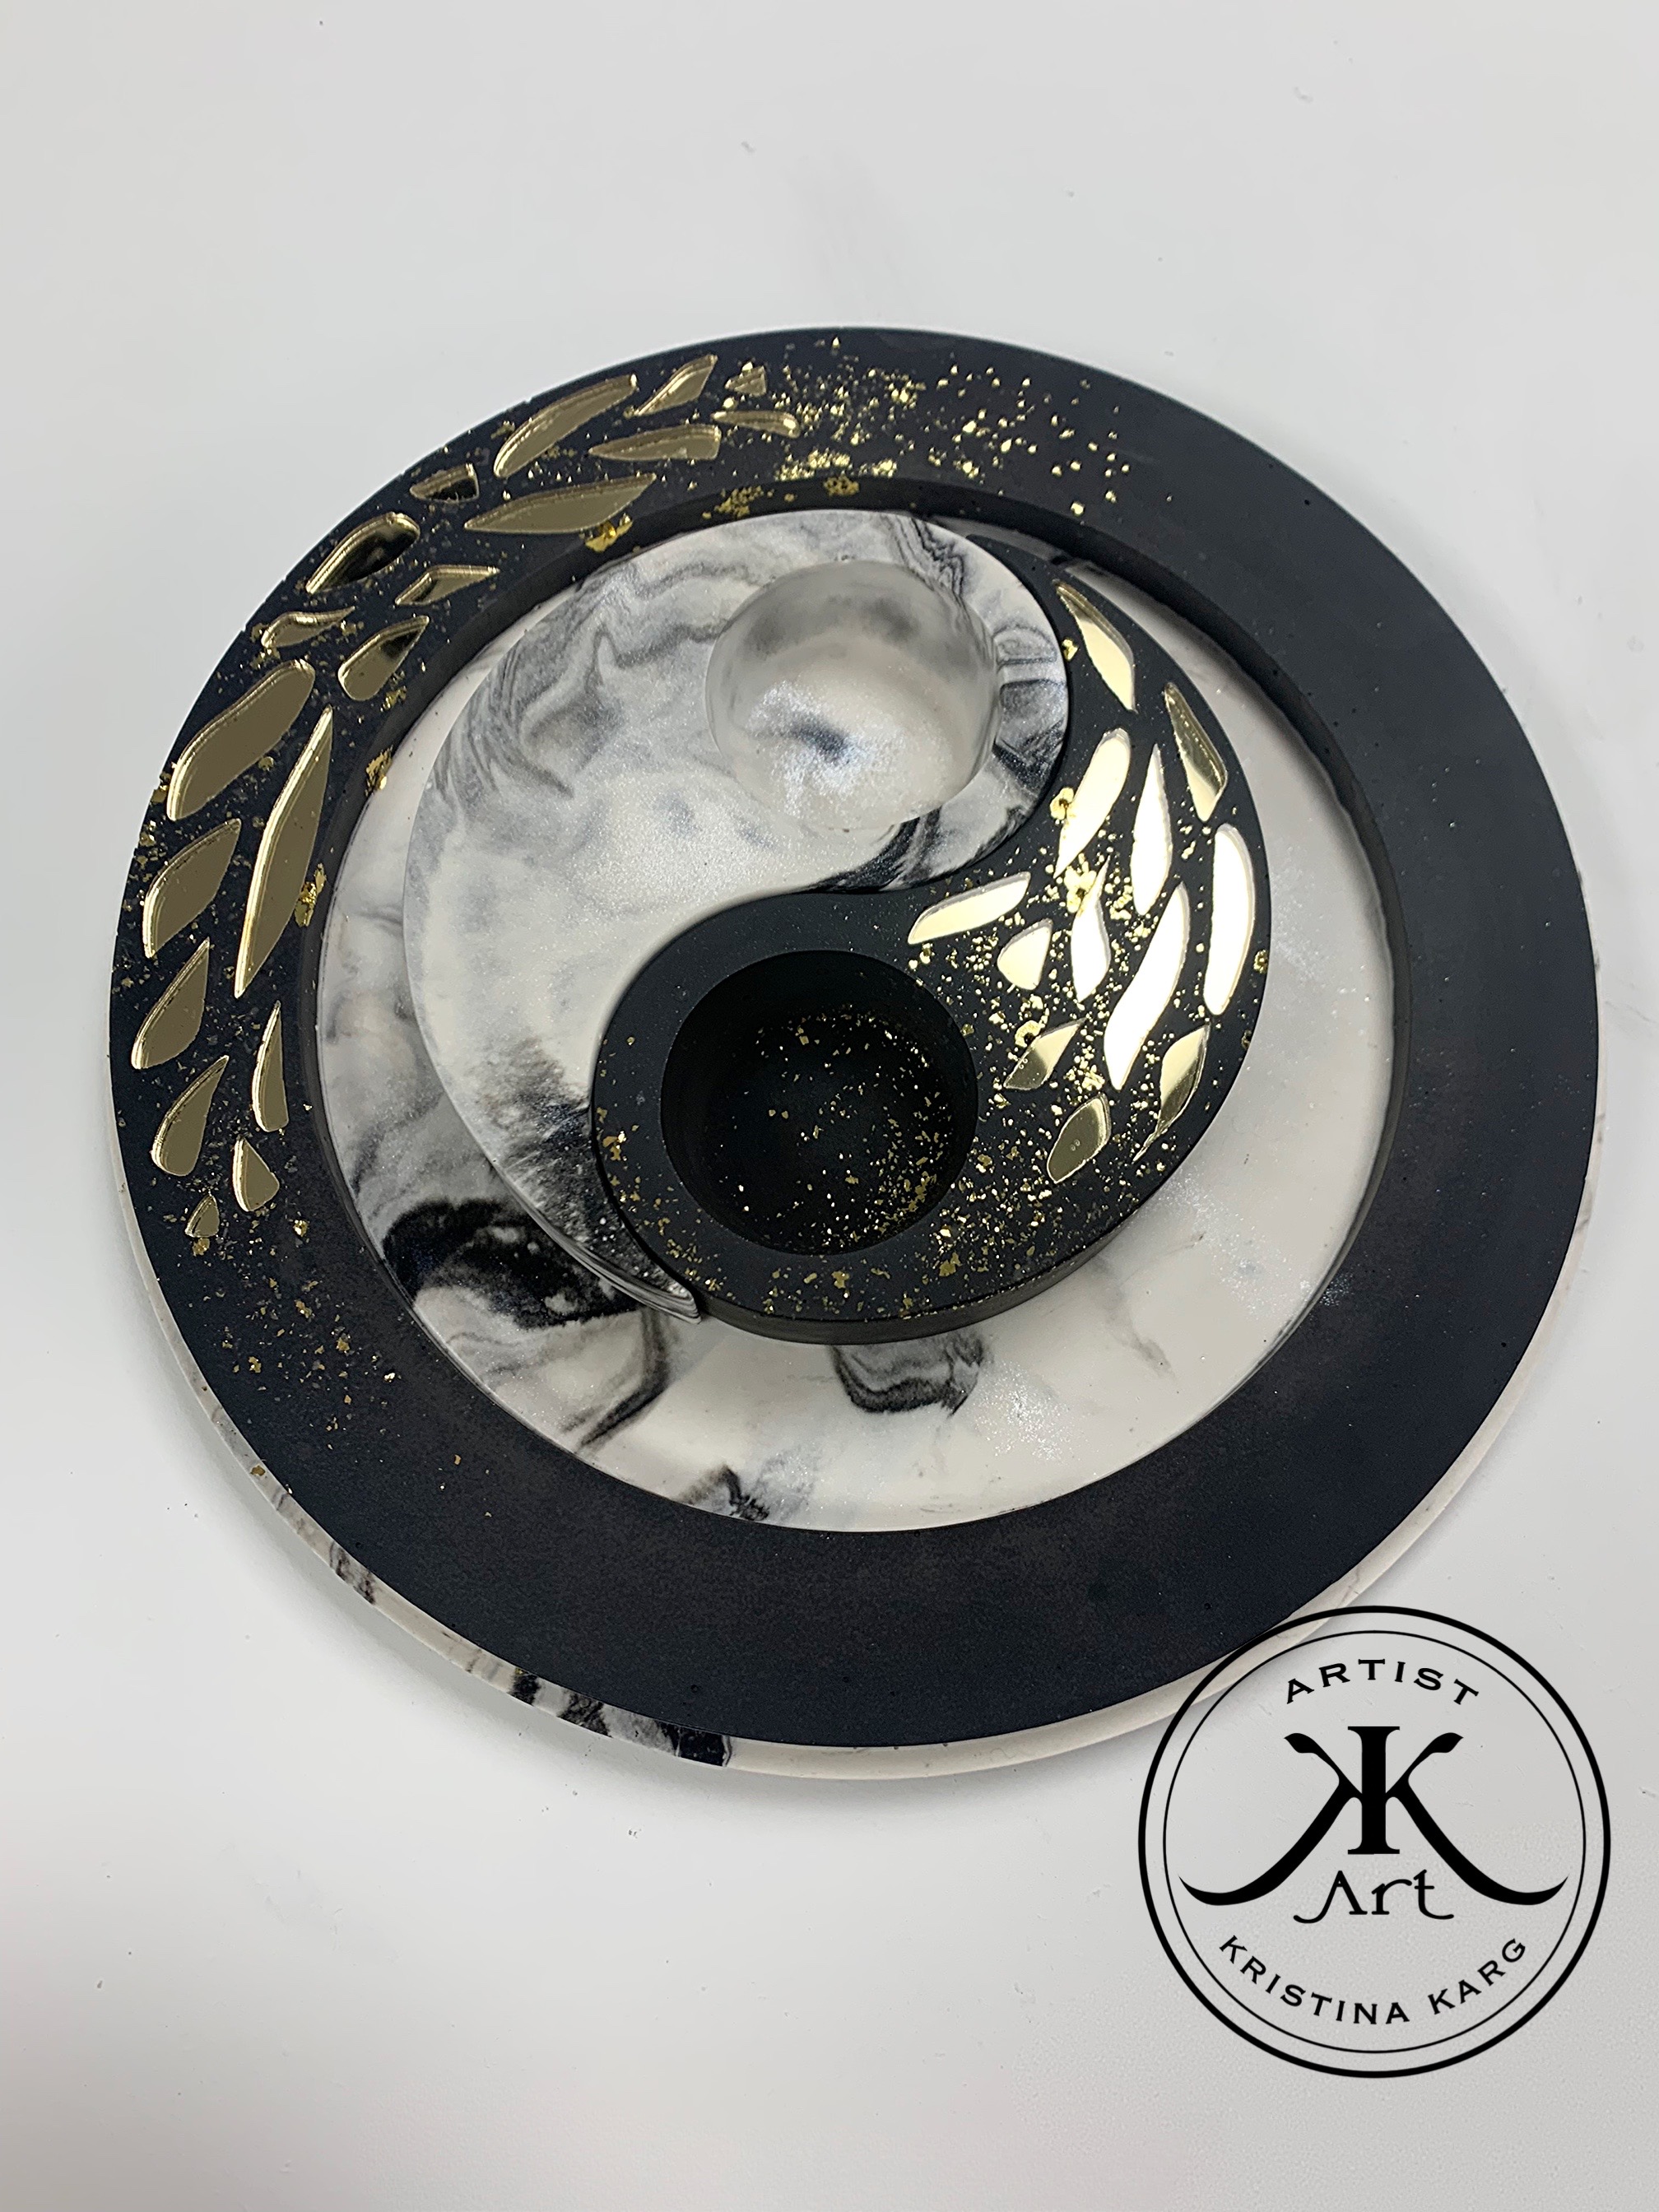 Yin Yang tealight mold